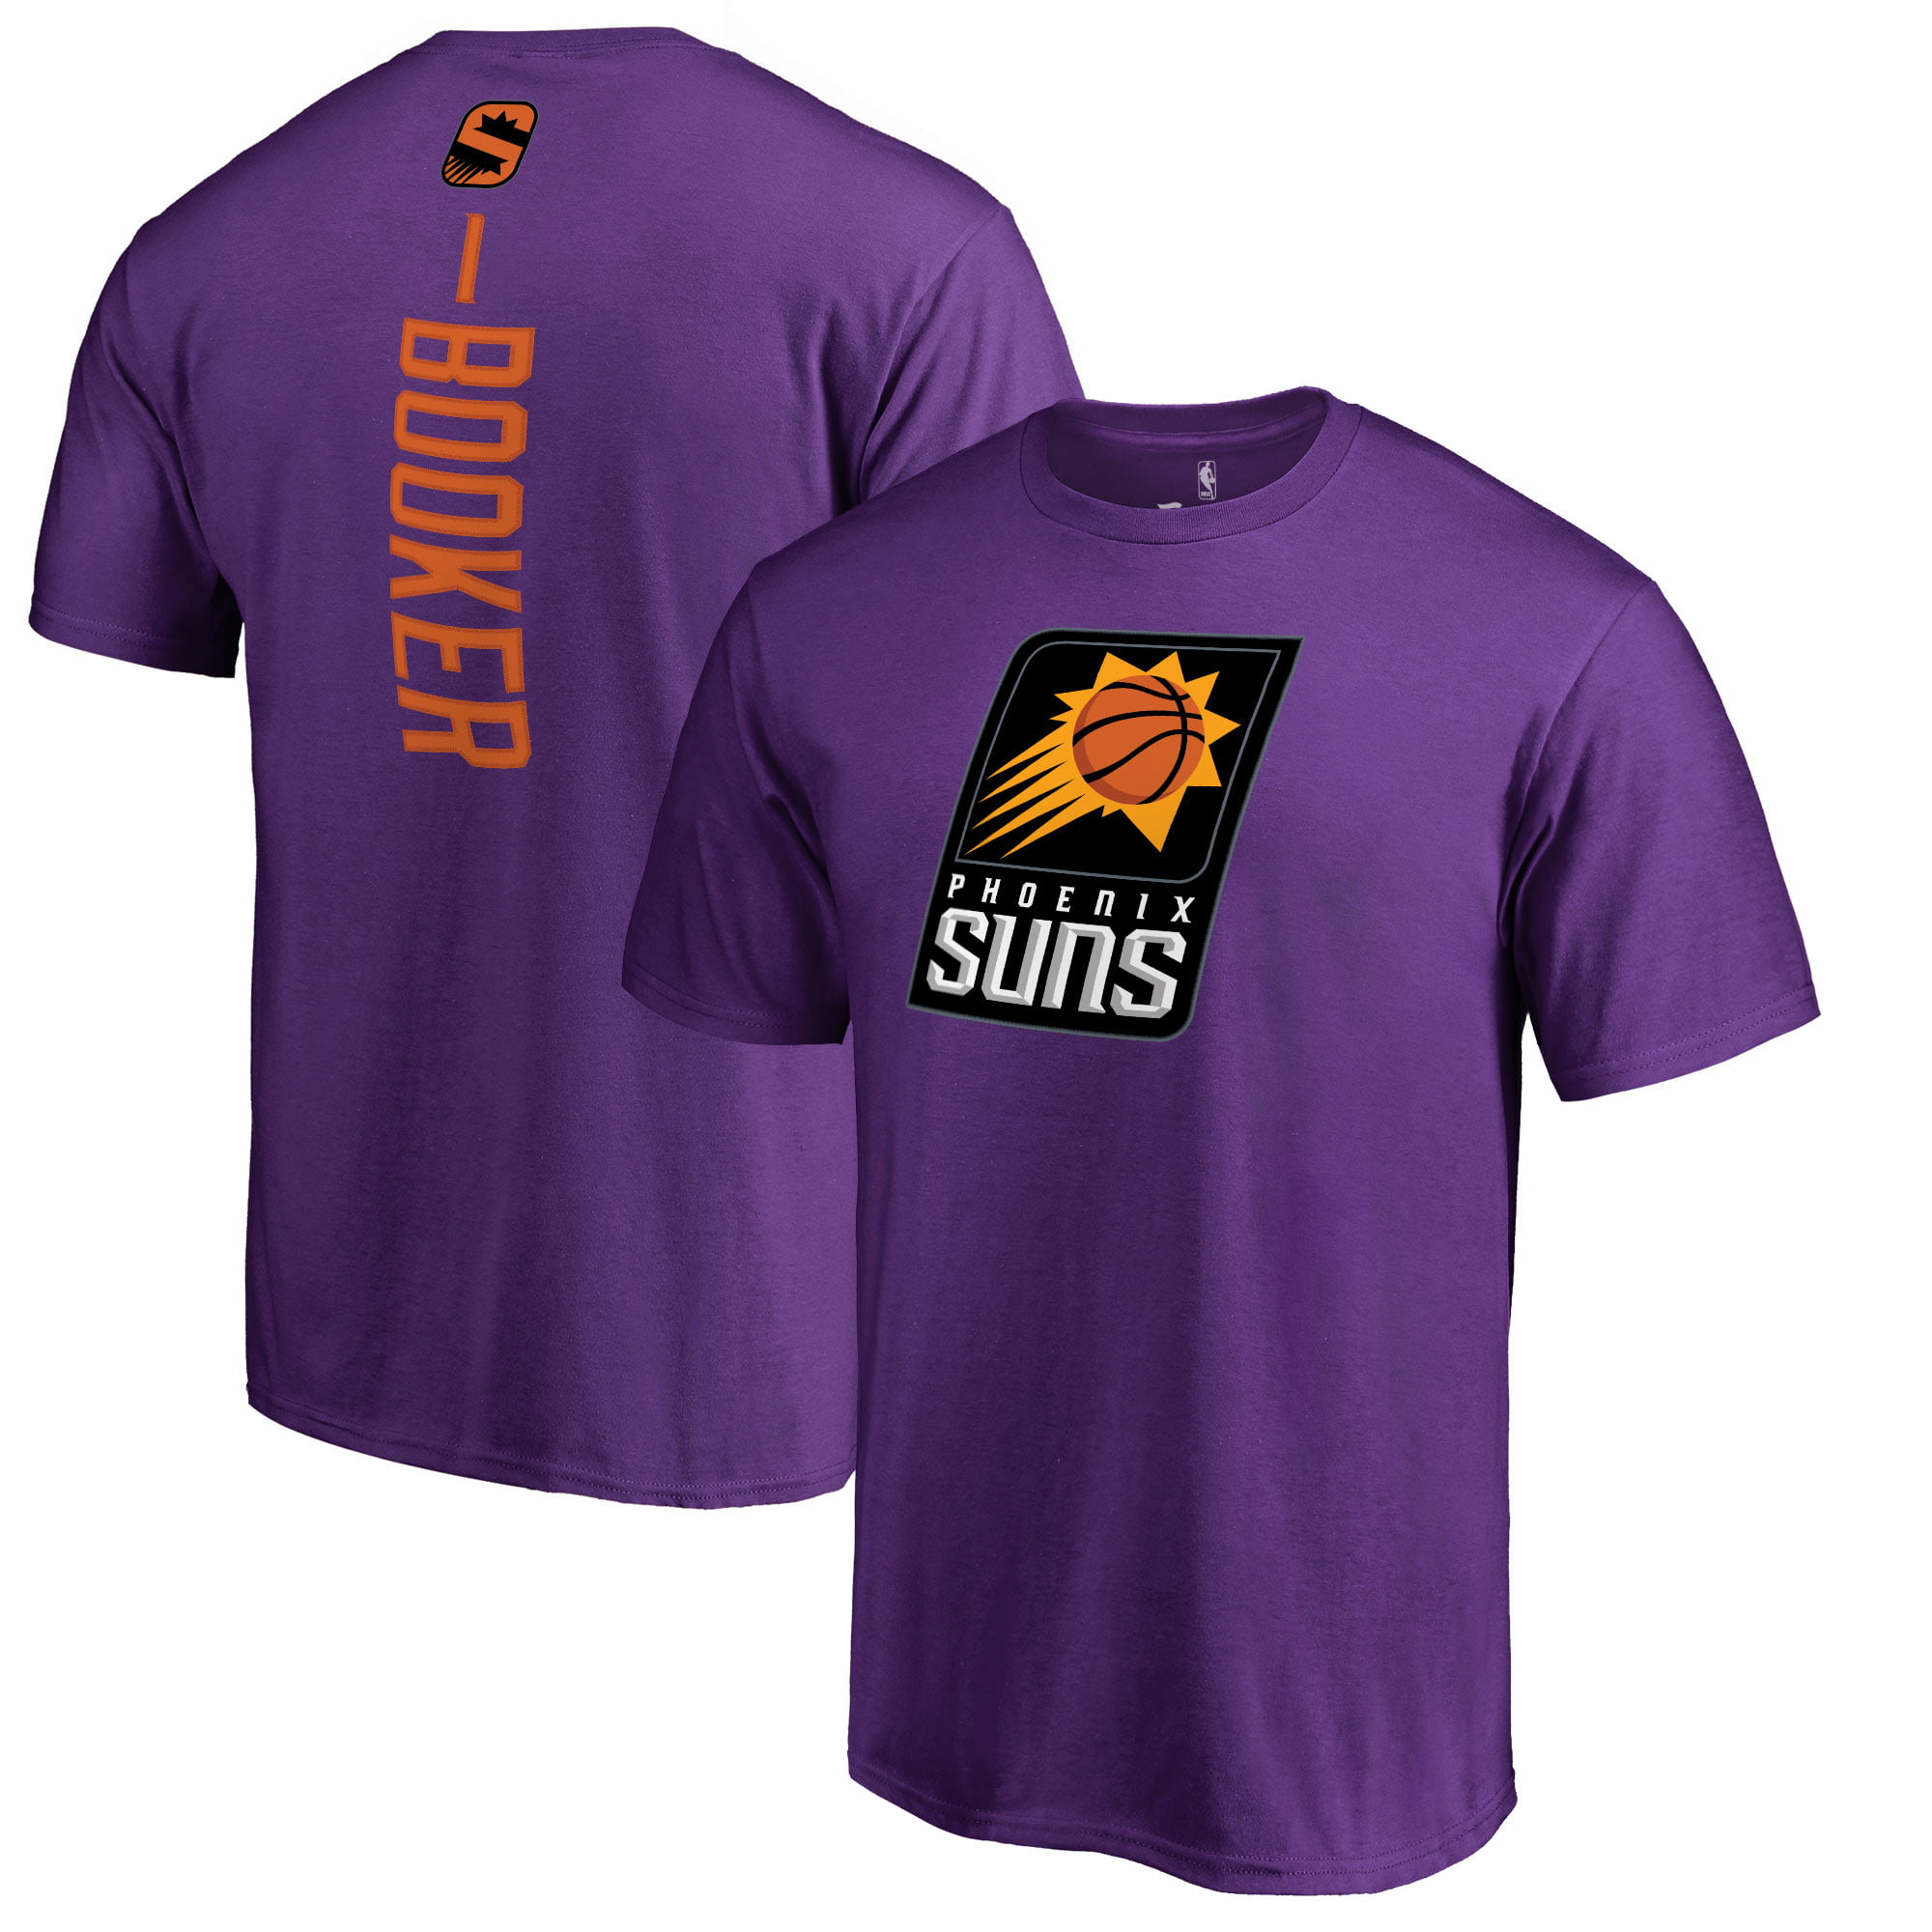 Phoenix Suns Nba Basic Short Sleeve Tee - Walmart.com ...